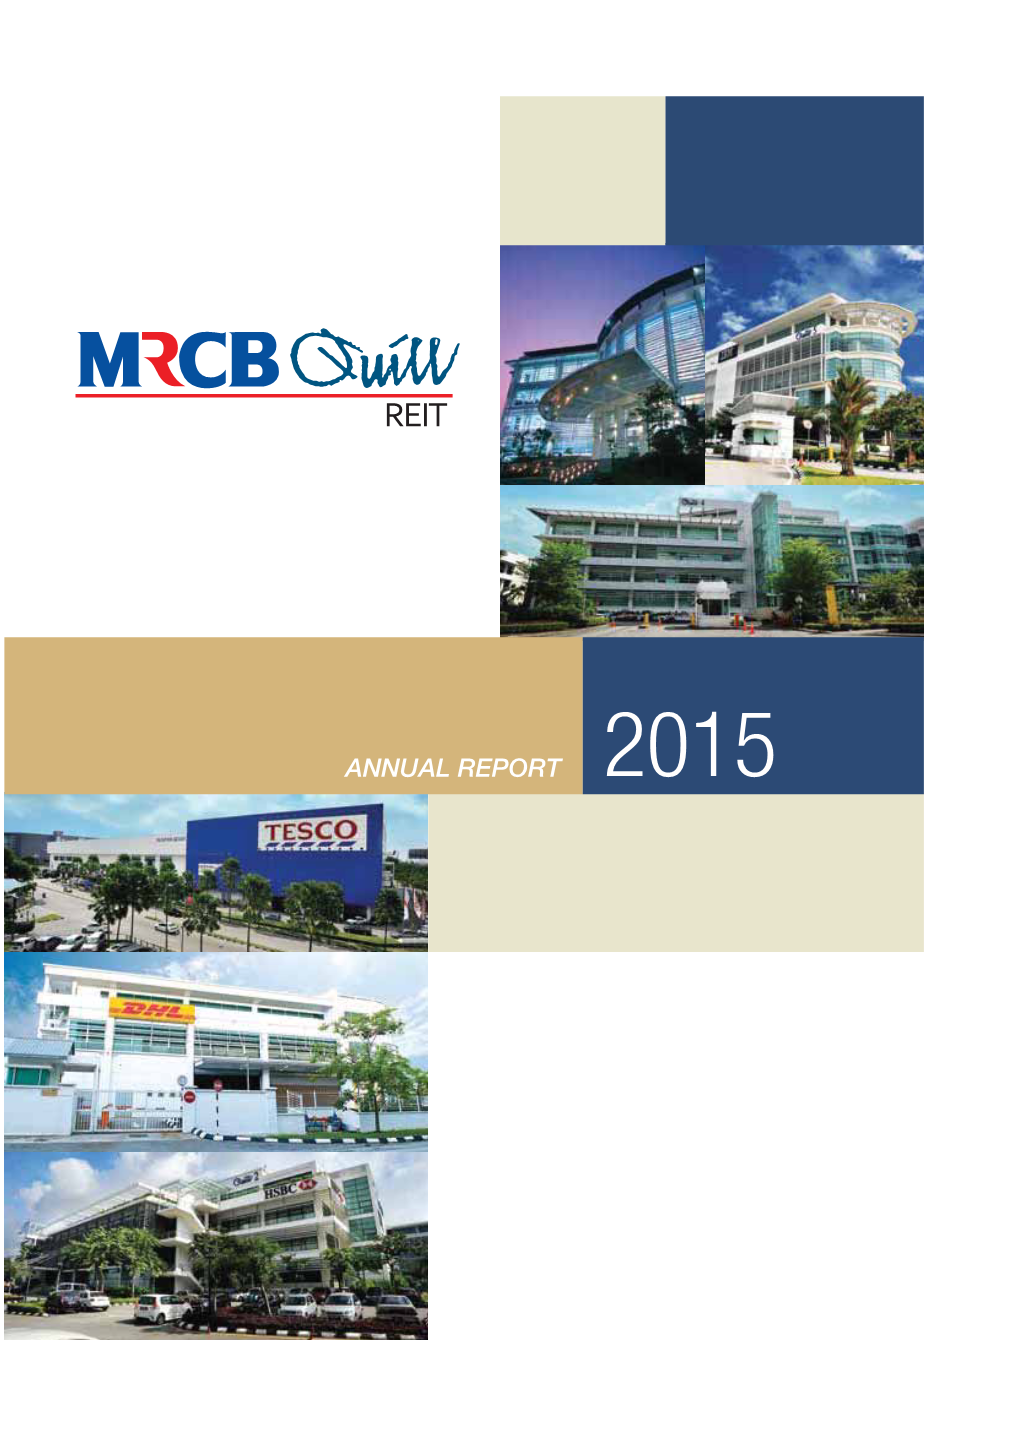 Annual Report Corporate